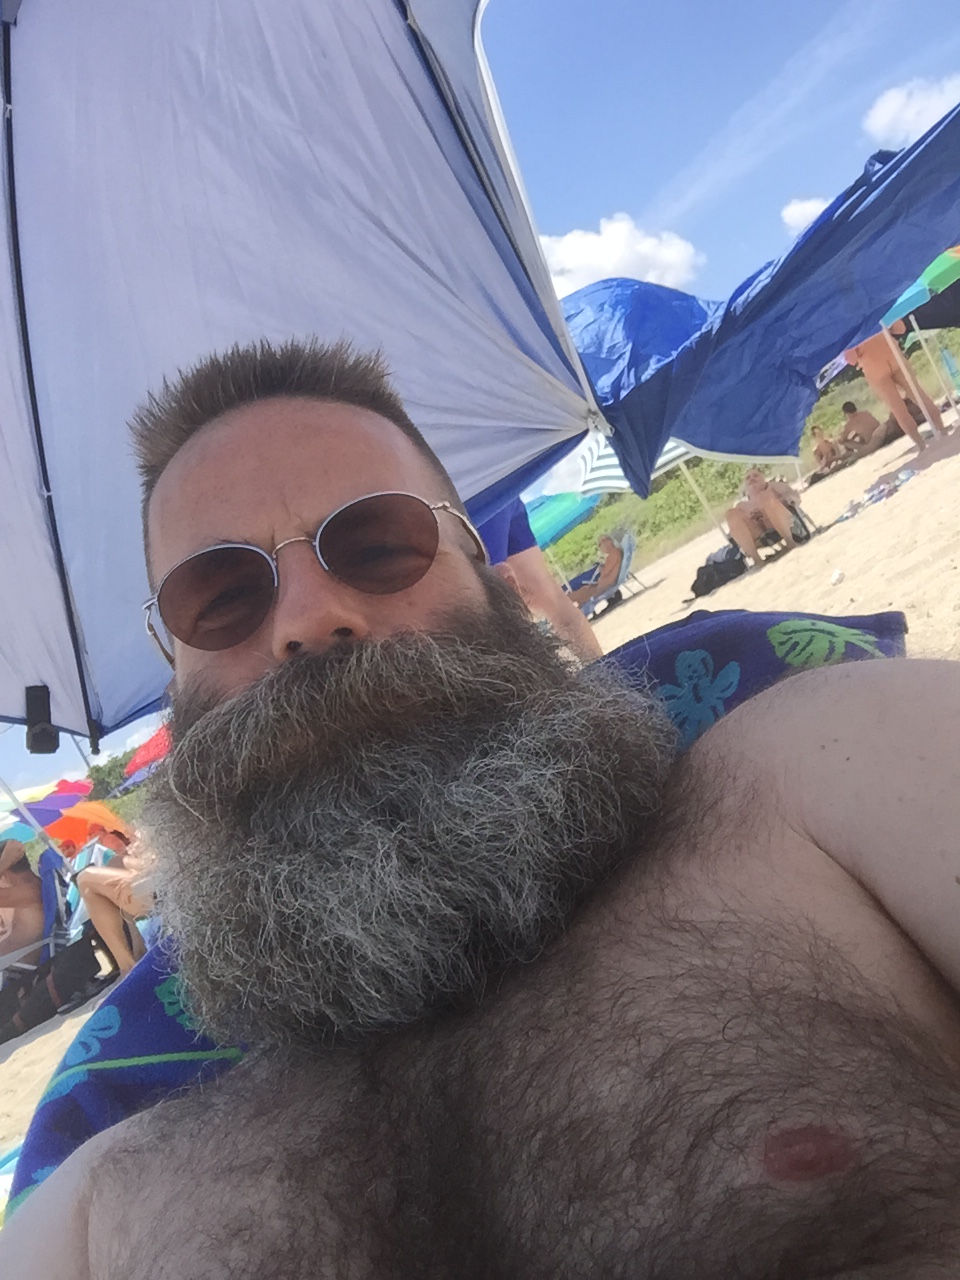 Topless Beach Tease - A day at the beach | Fearsome Beard